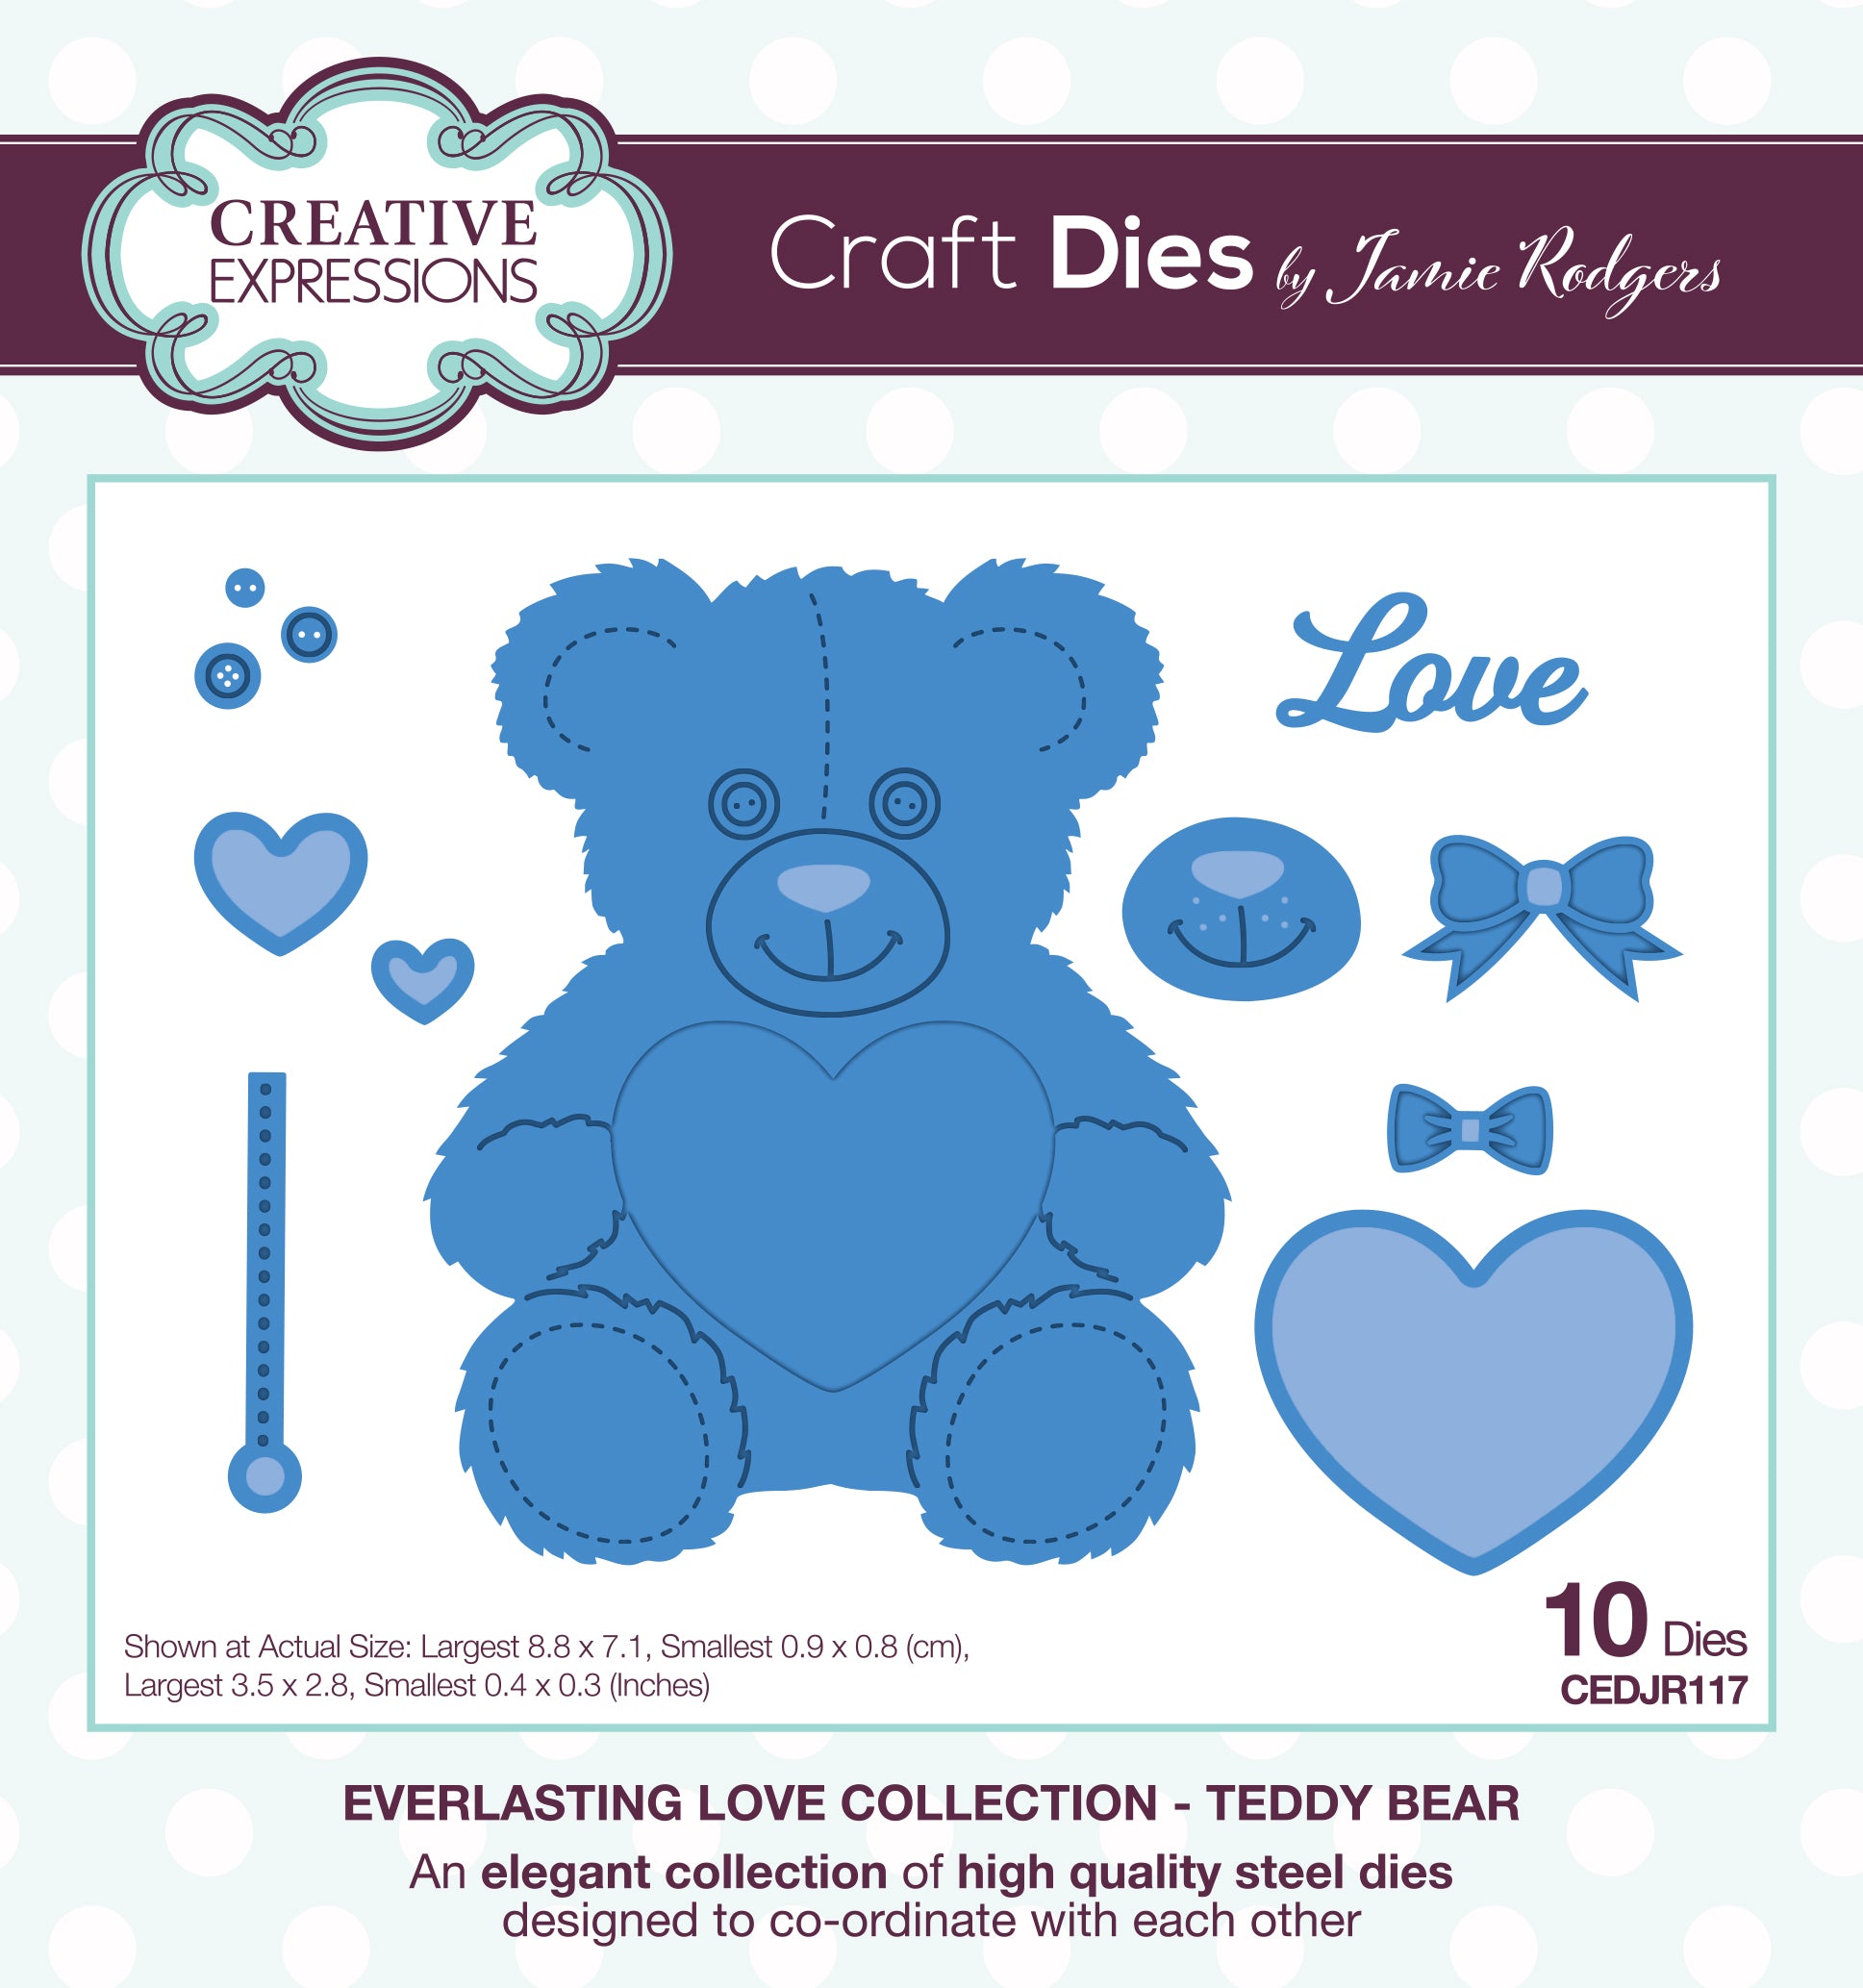 Creative Expressions Jamie Rodgers Everlasting Love Teddy Bear Craft Die